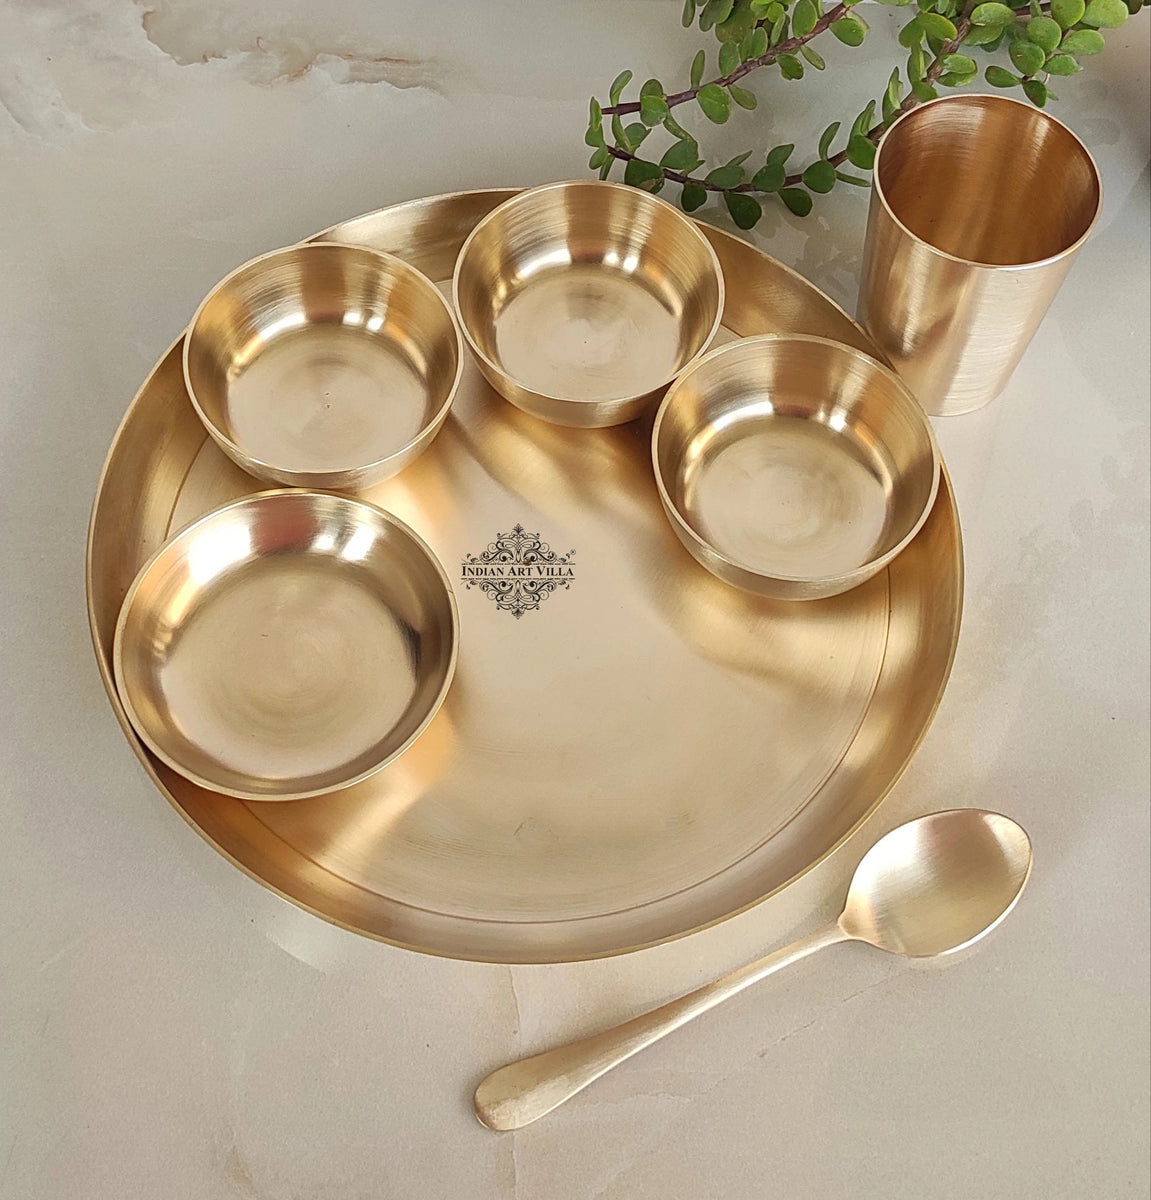 Buy Brass Plate for eating, Brass Thali Online